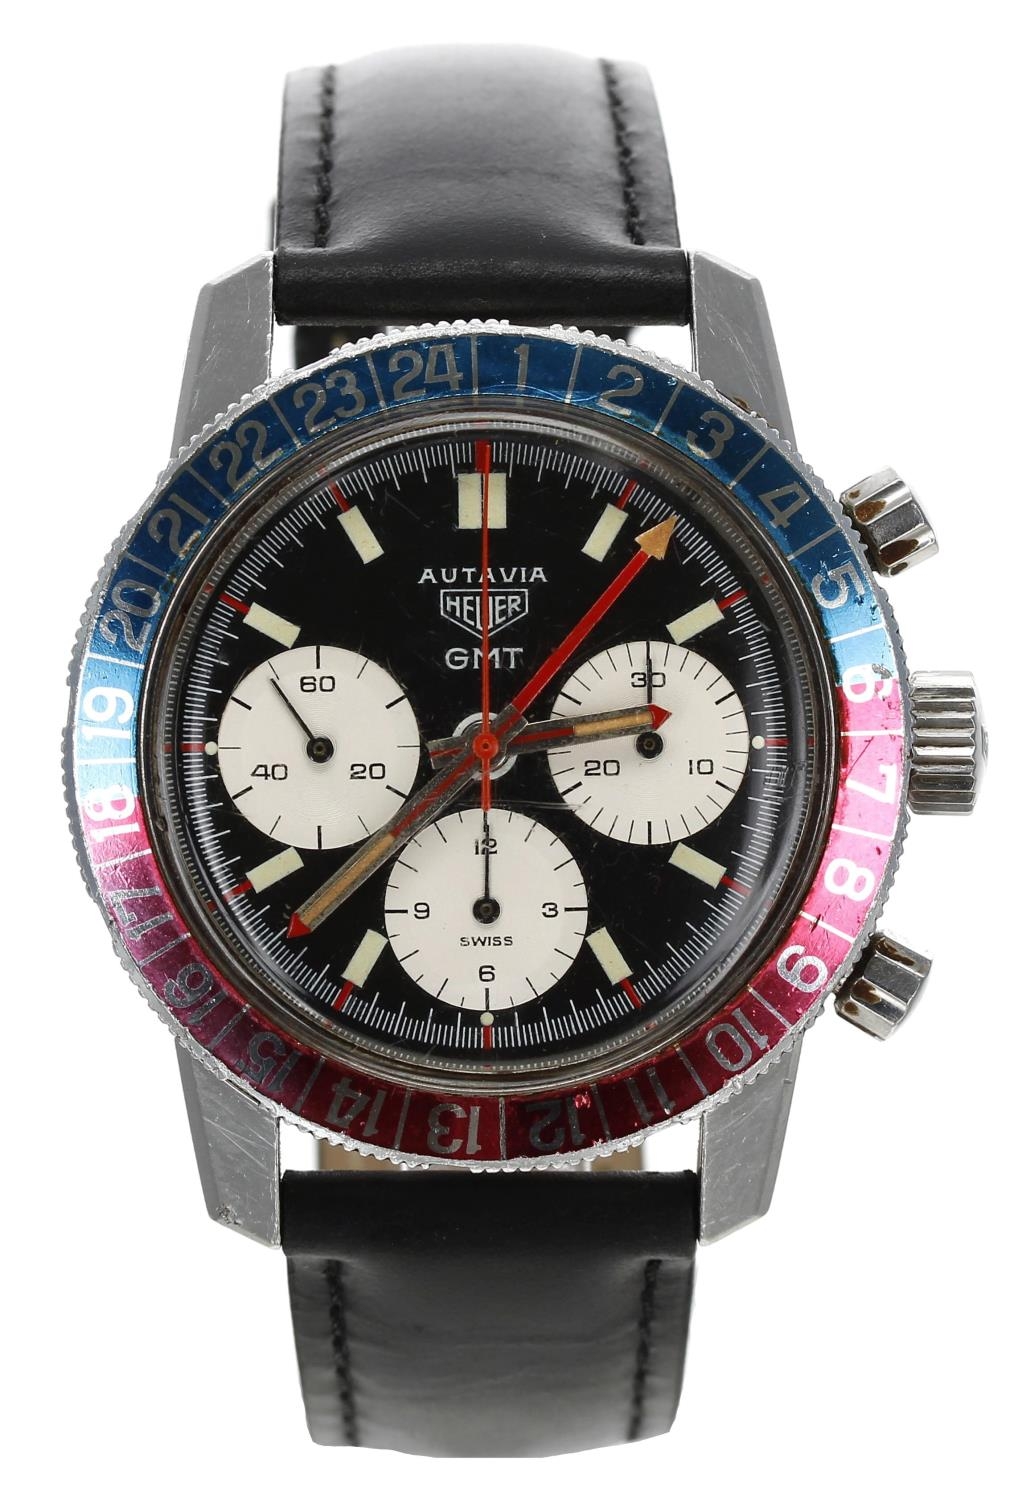 Rare Heuer Autavia GMT Chronograph stainless steel gentleman's wristwatch, reference no. 2446C,